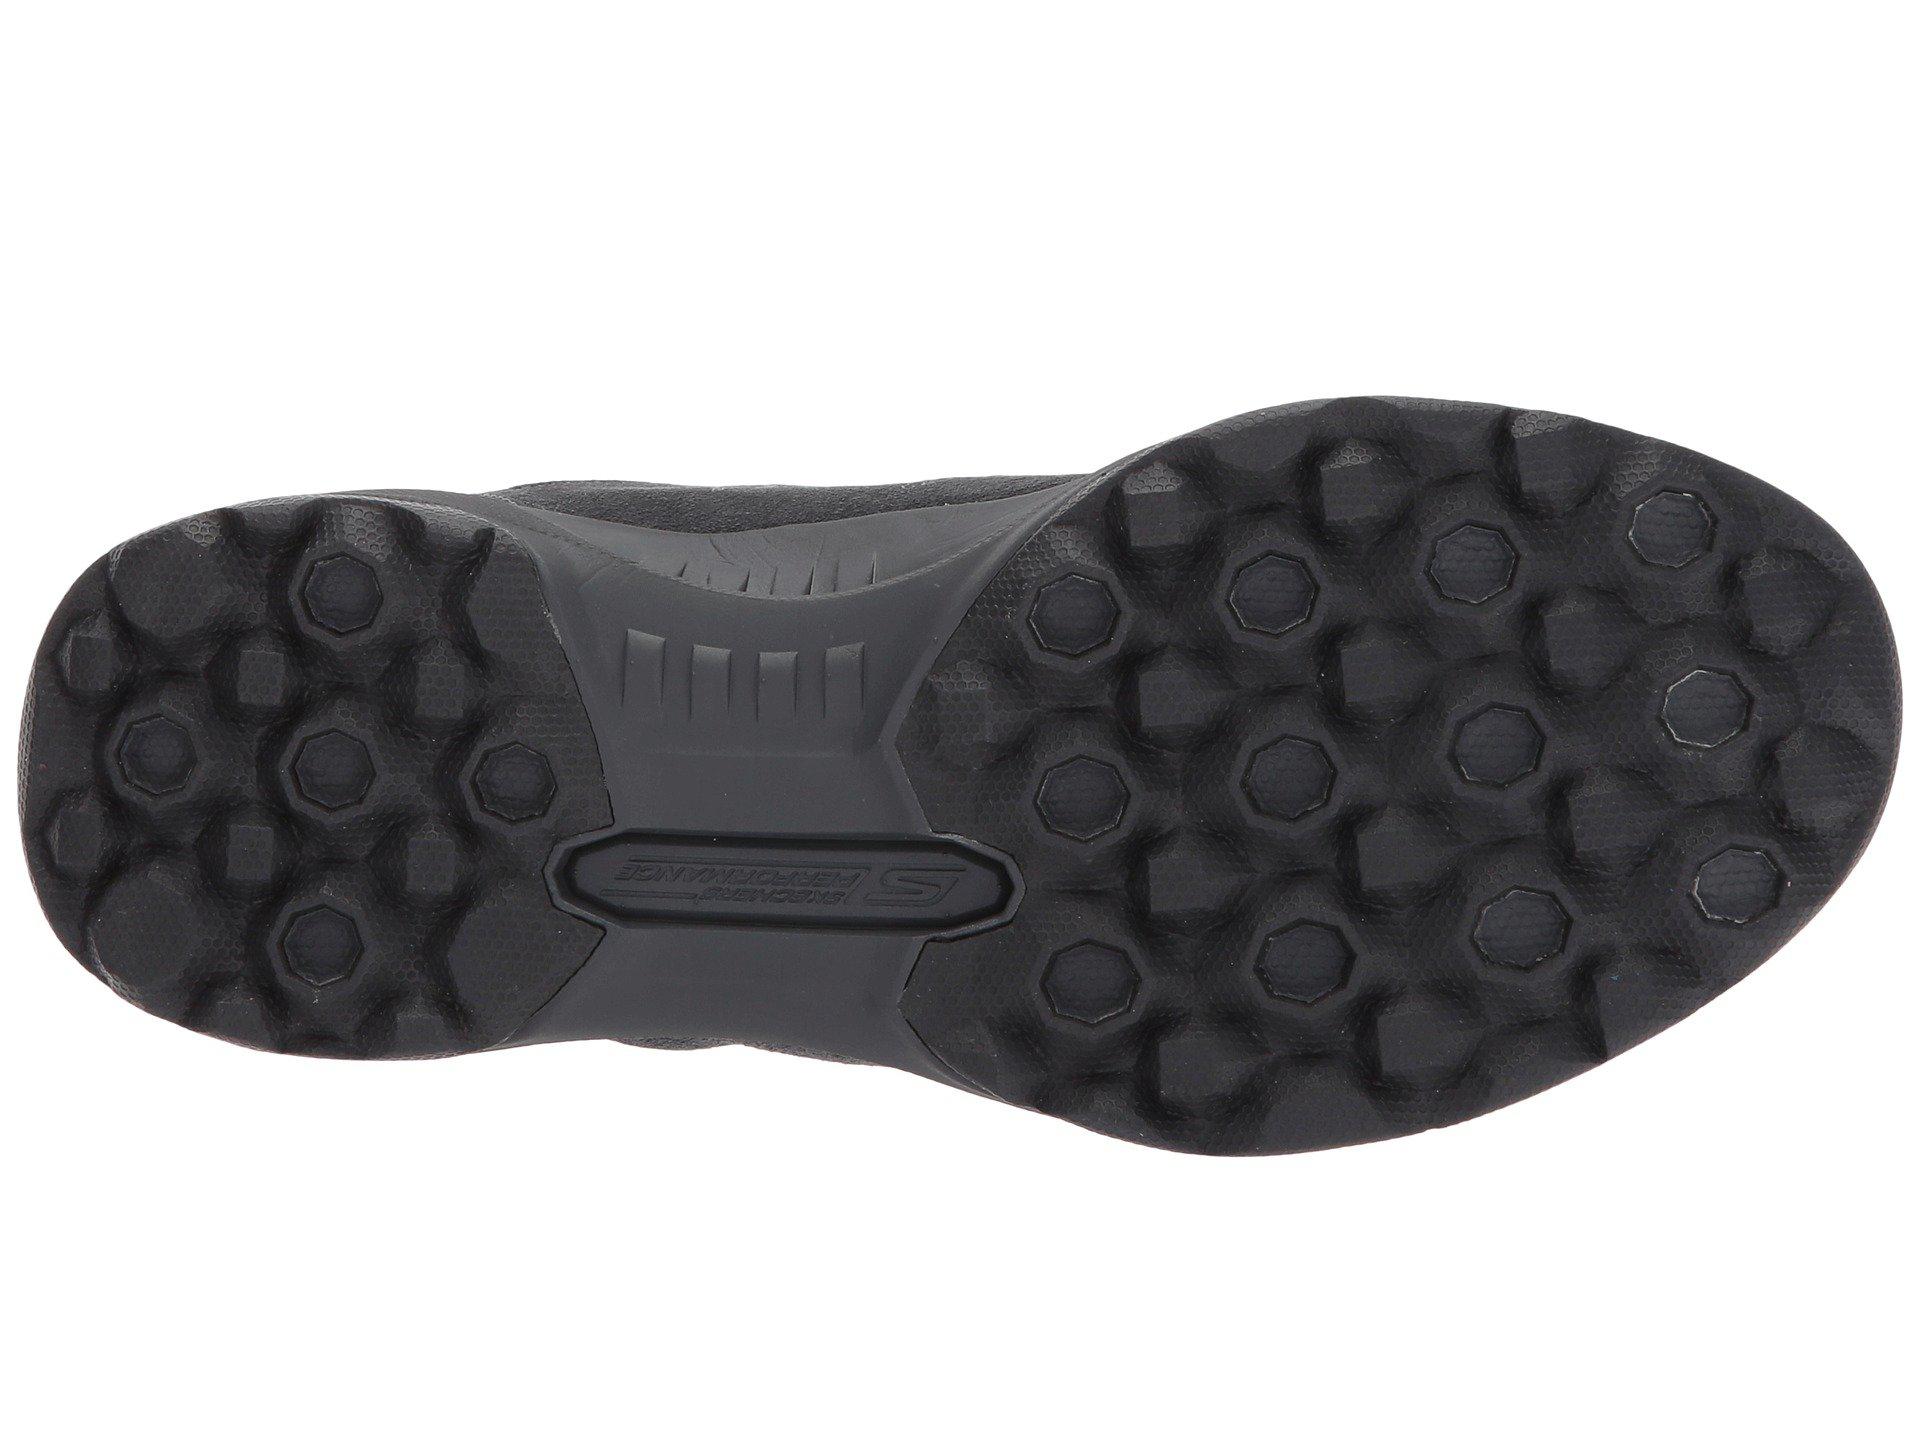 Skechers Go Walk Outdoors 2 (charcoal/black) Men's Walking Shoes for Men |  Lyst